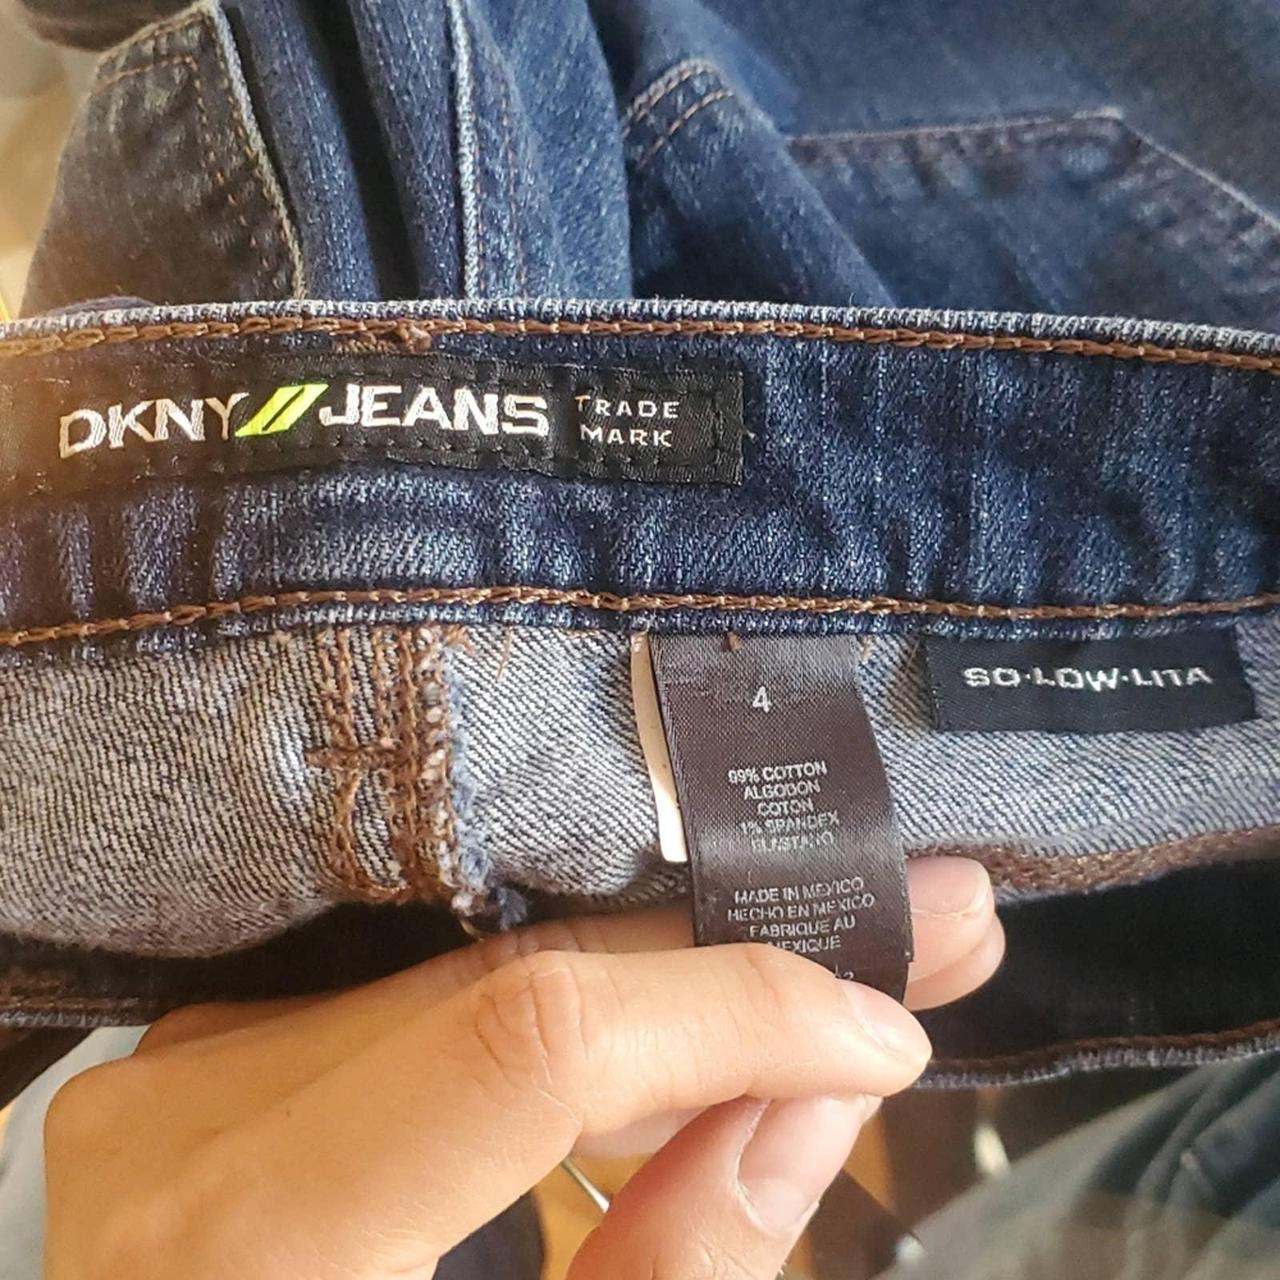 DKNY Jeans Trade Mark So Low Lita Dark Wash Denim - Depop